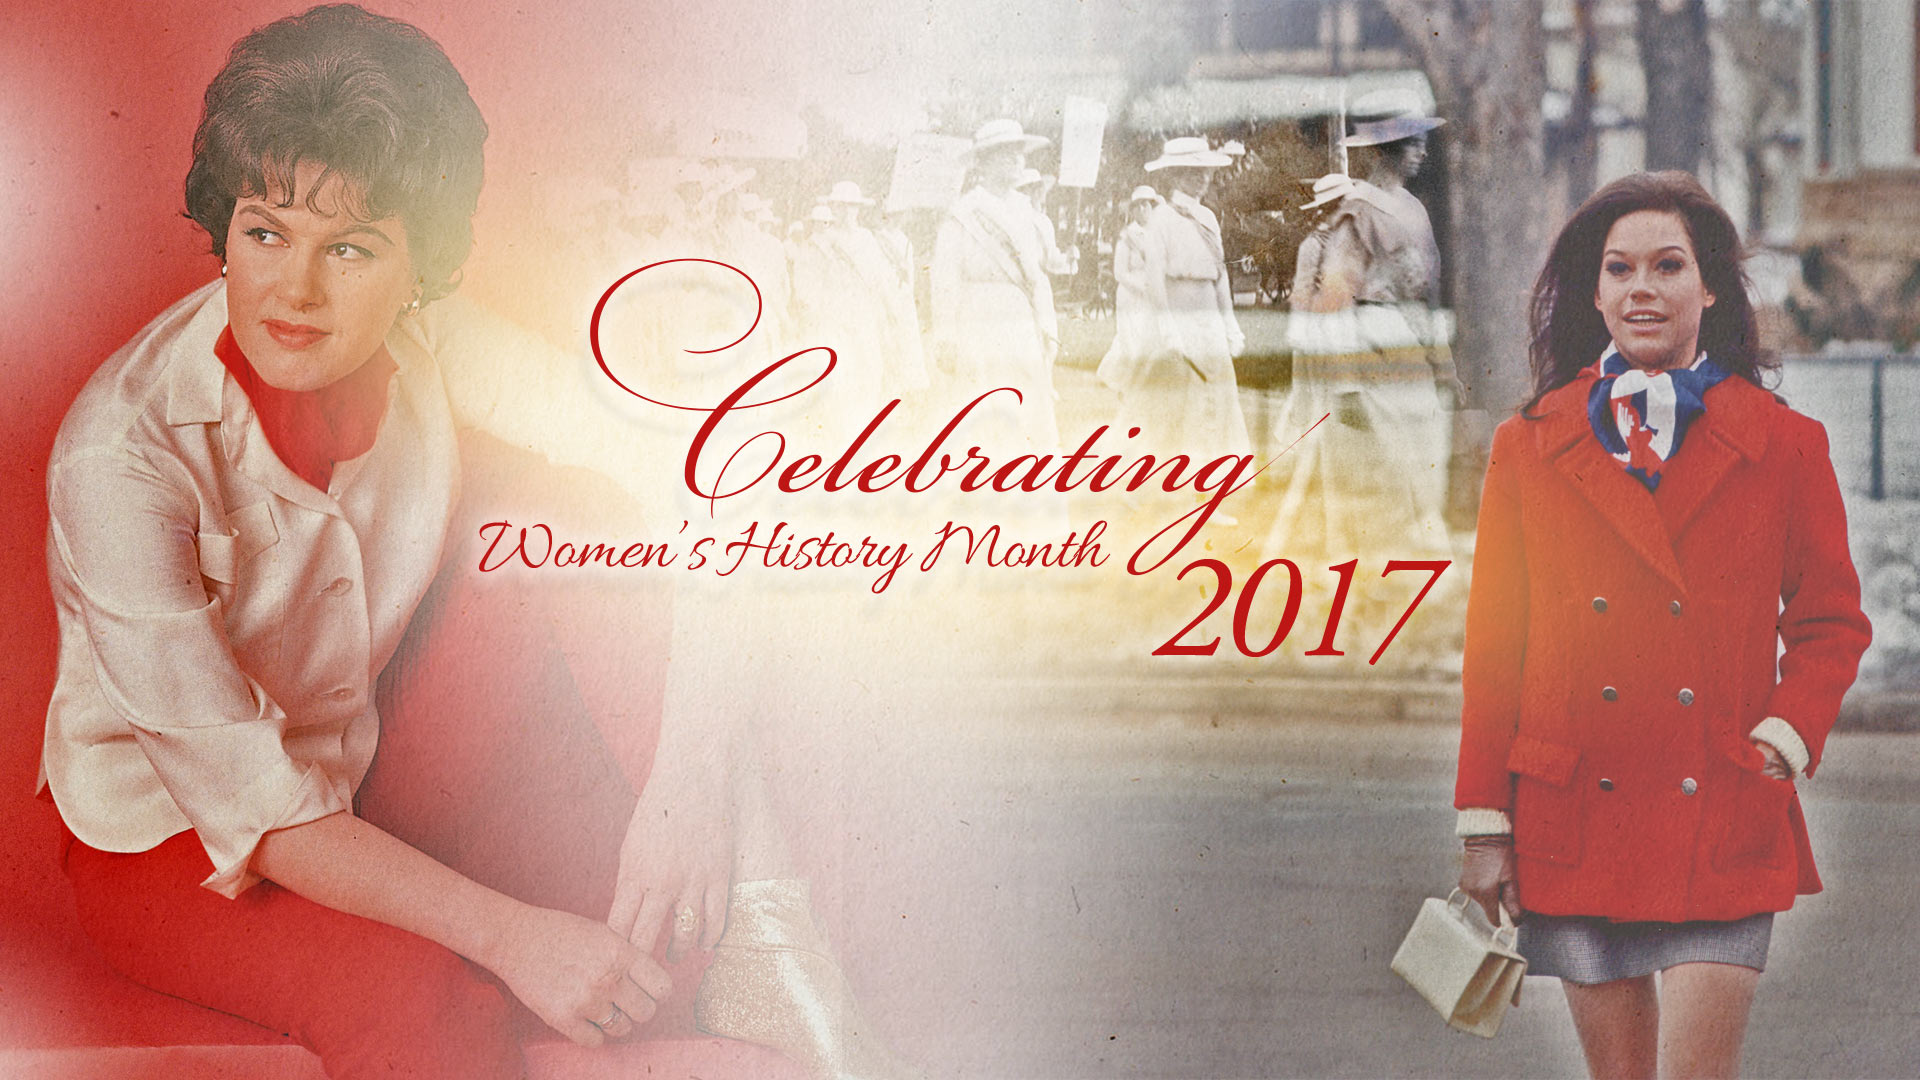 Women's History Month iconic hero